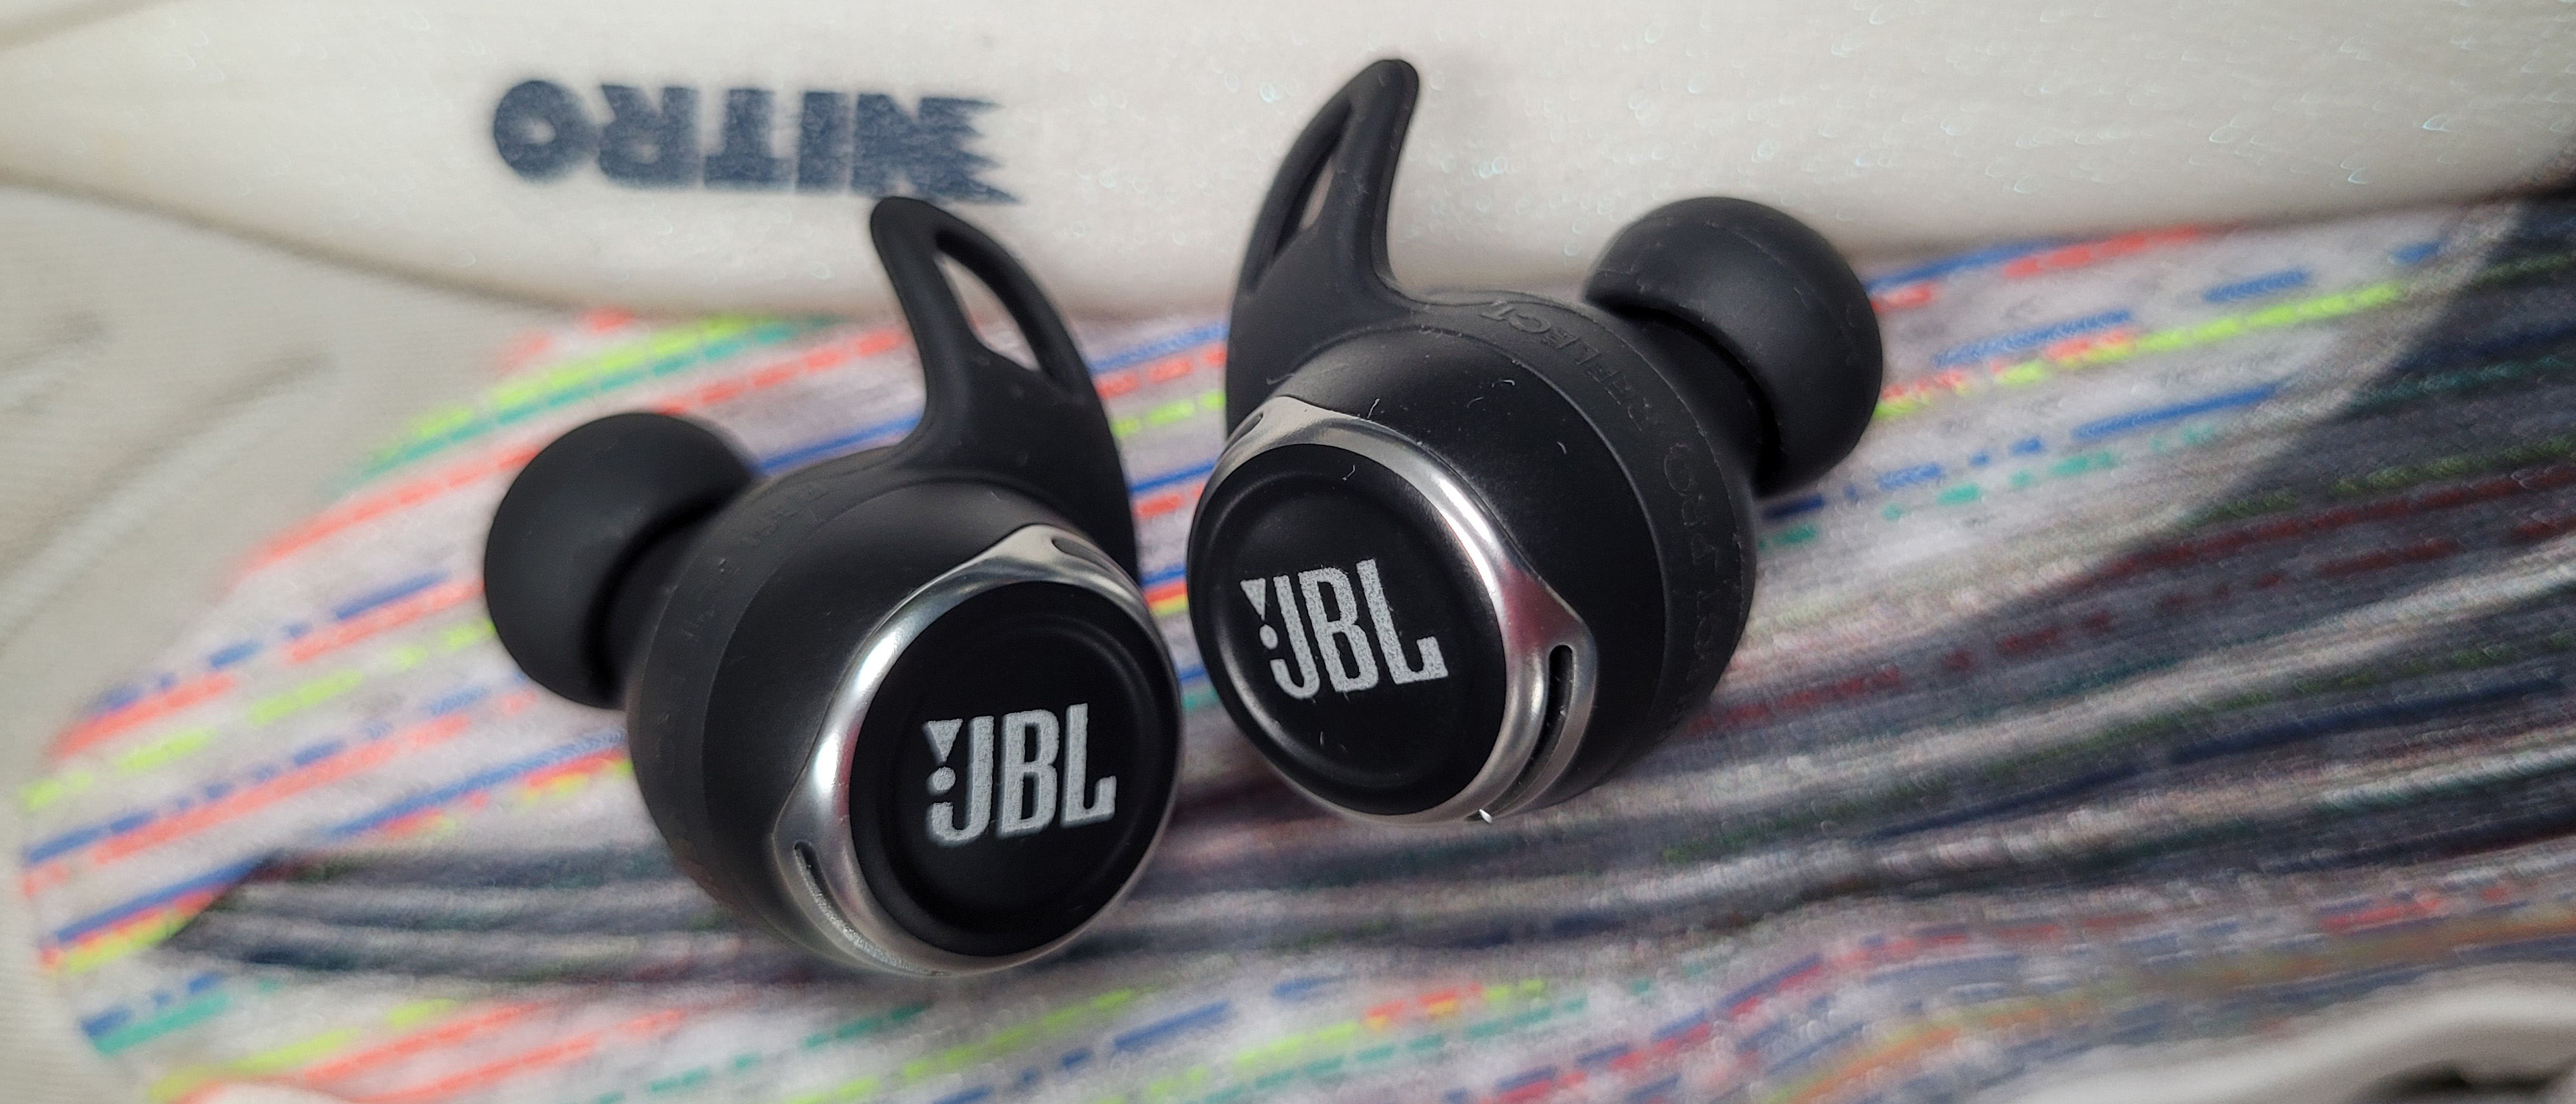 NEW】JBL REFLECT FLOW PRO WIRELESS NOISE CANCELLING EARBUDS